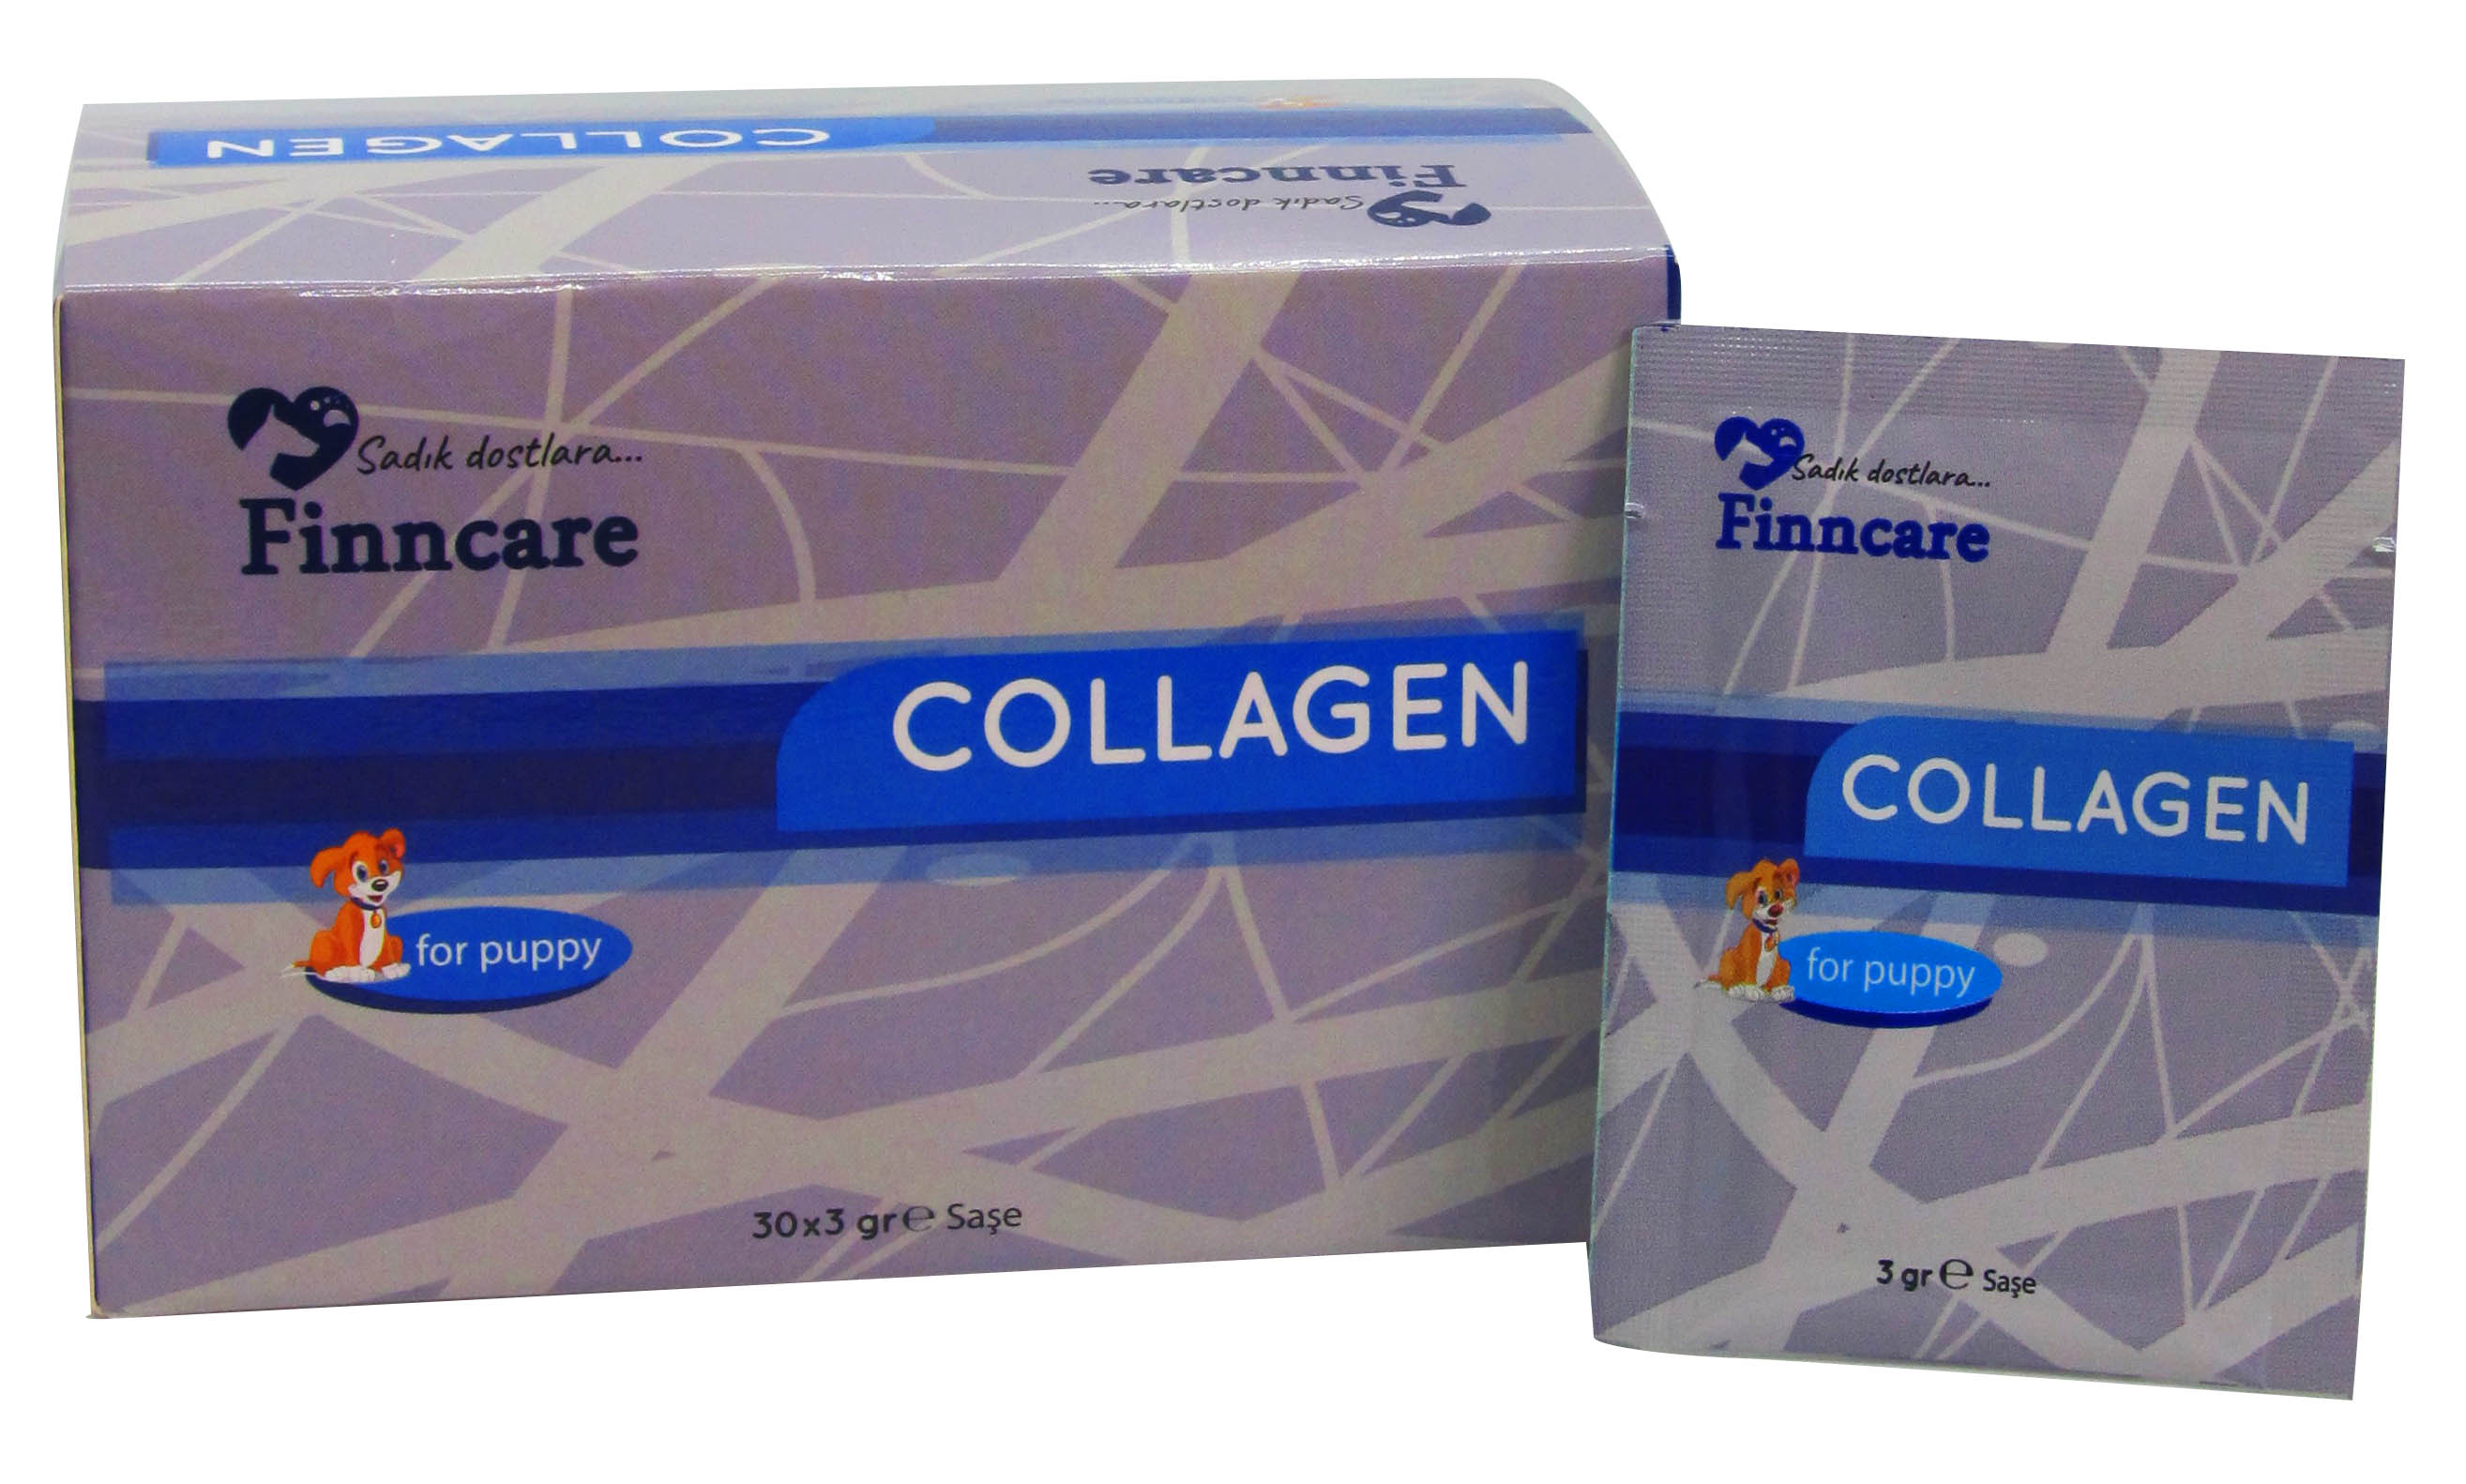 Finncare Collagen